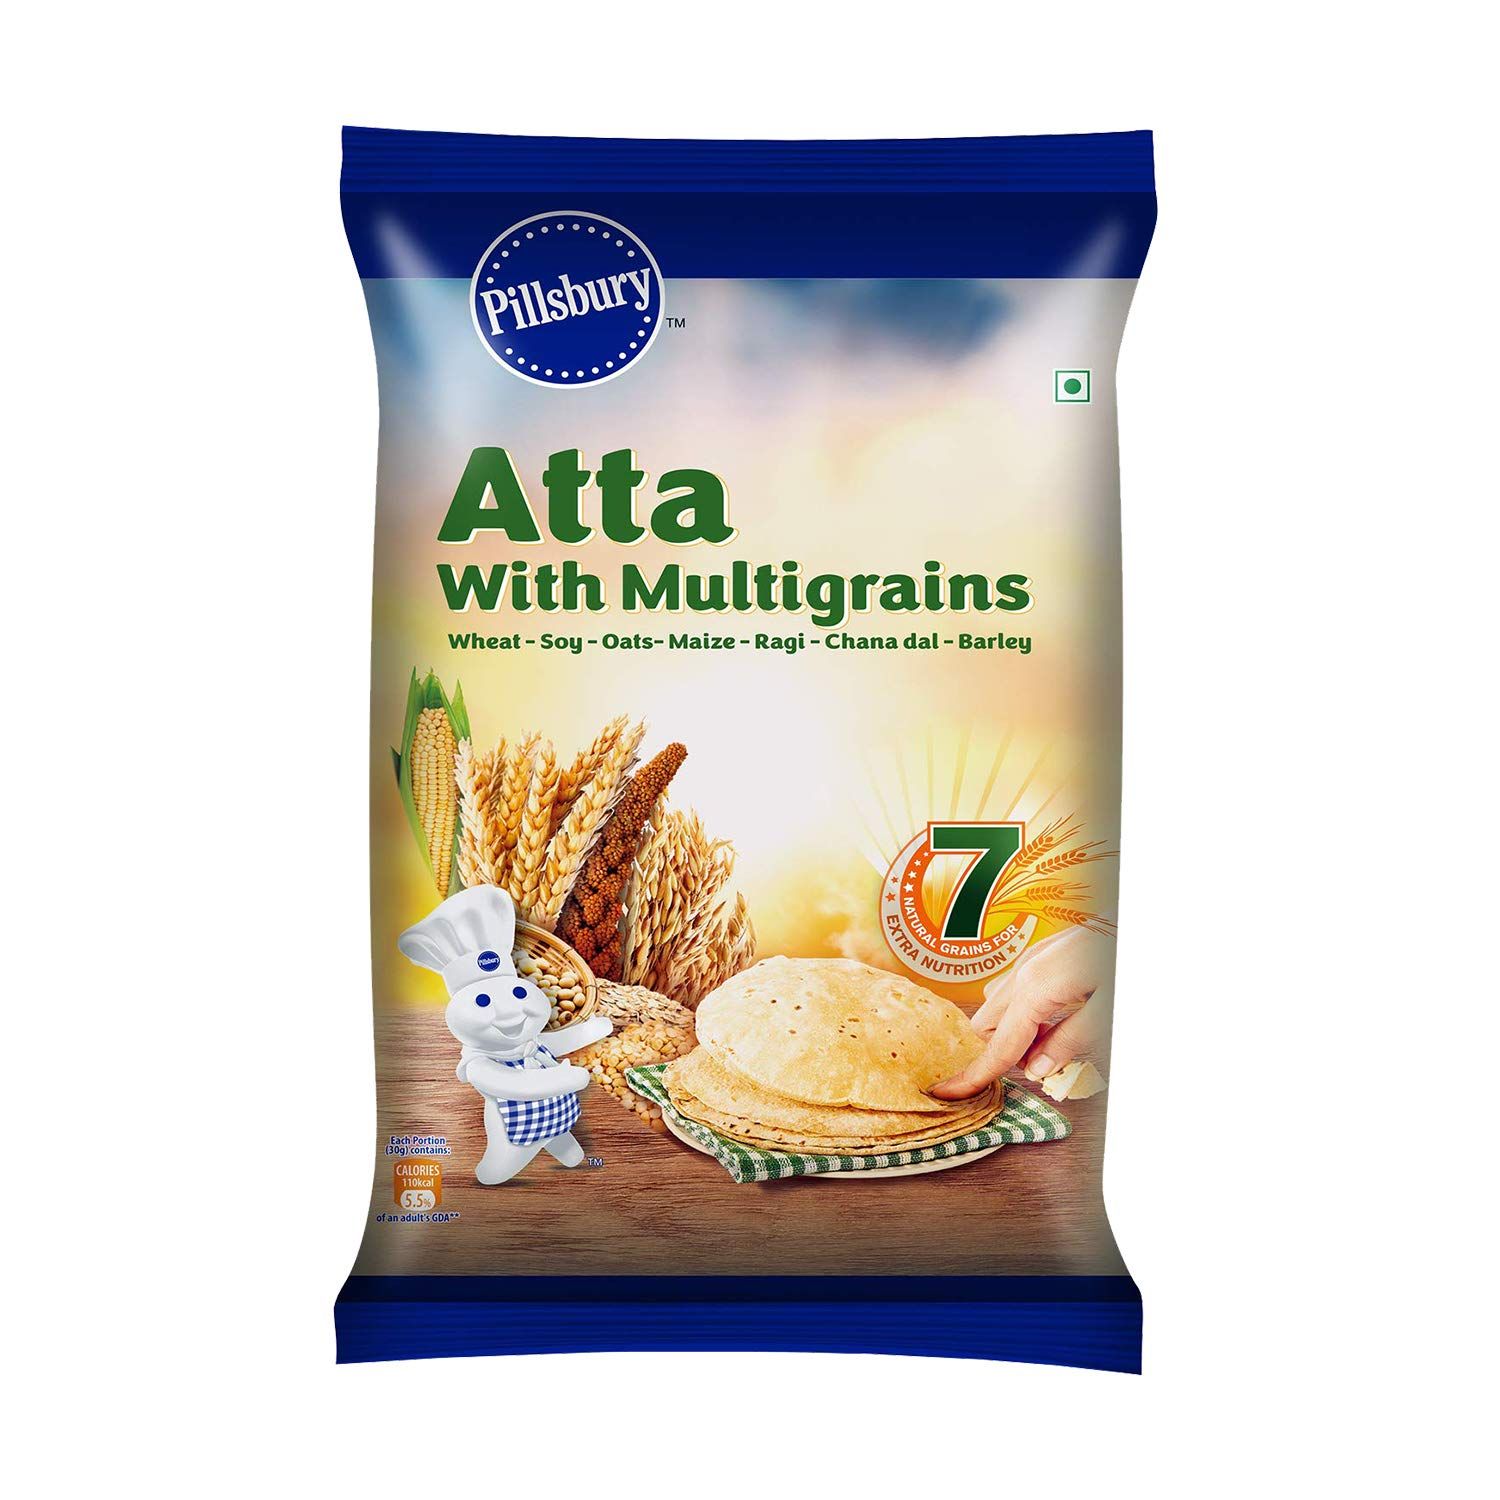 Pillsbury Atta With Multigrains Wheat Grain Image